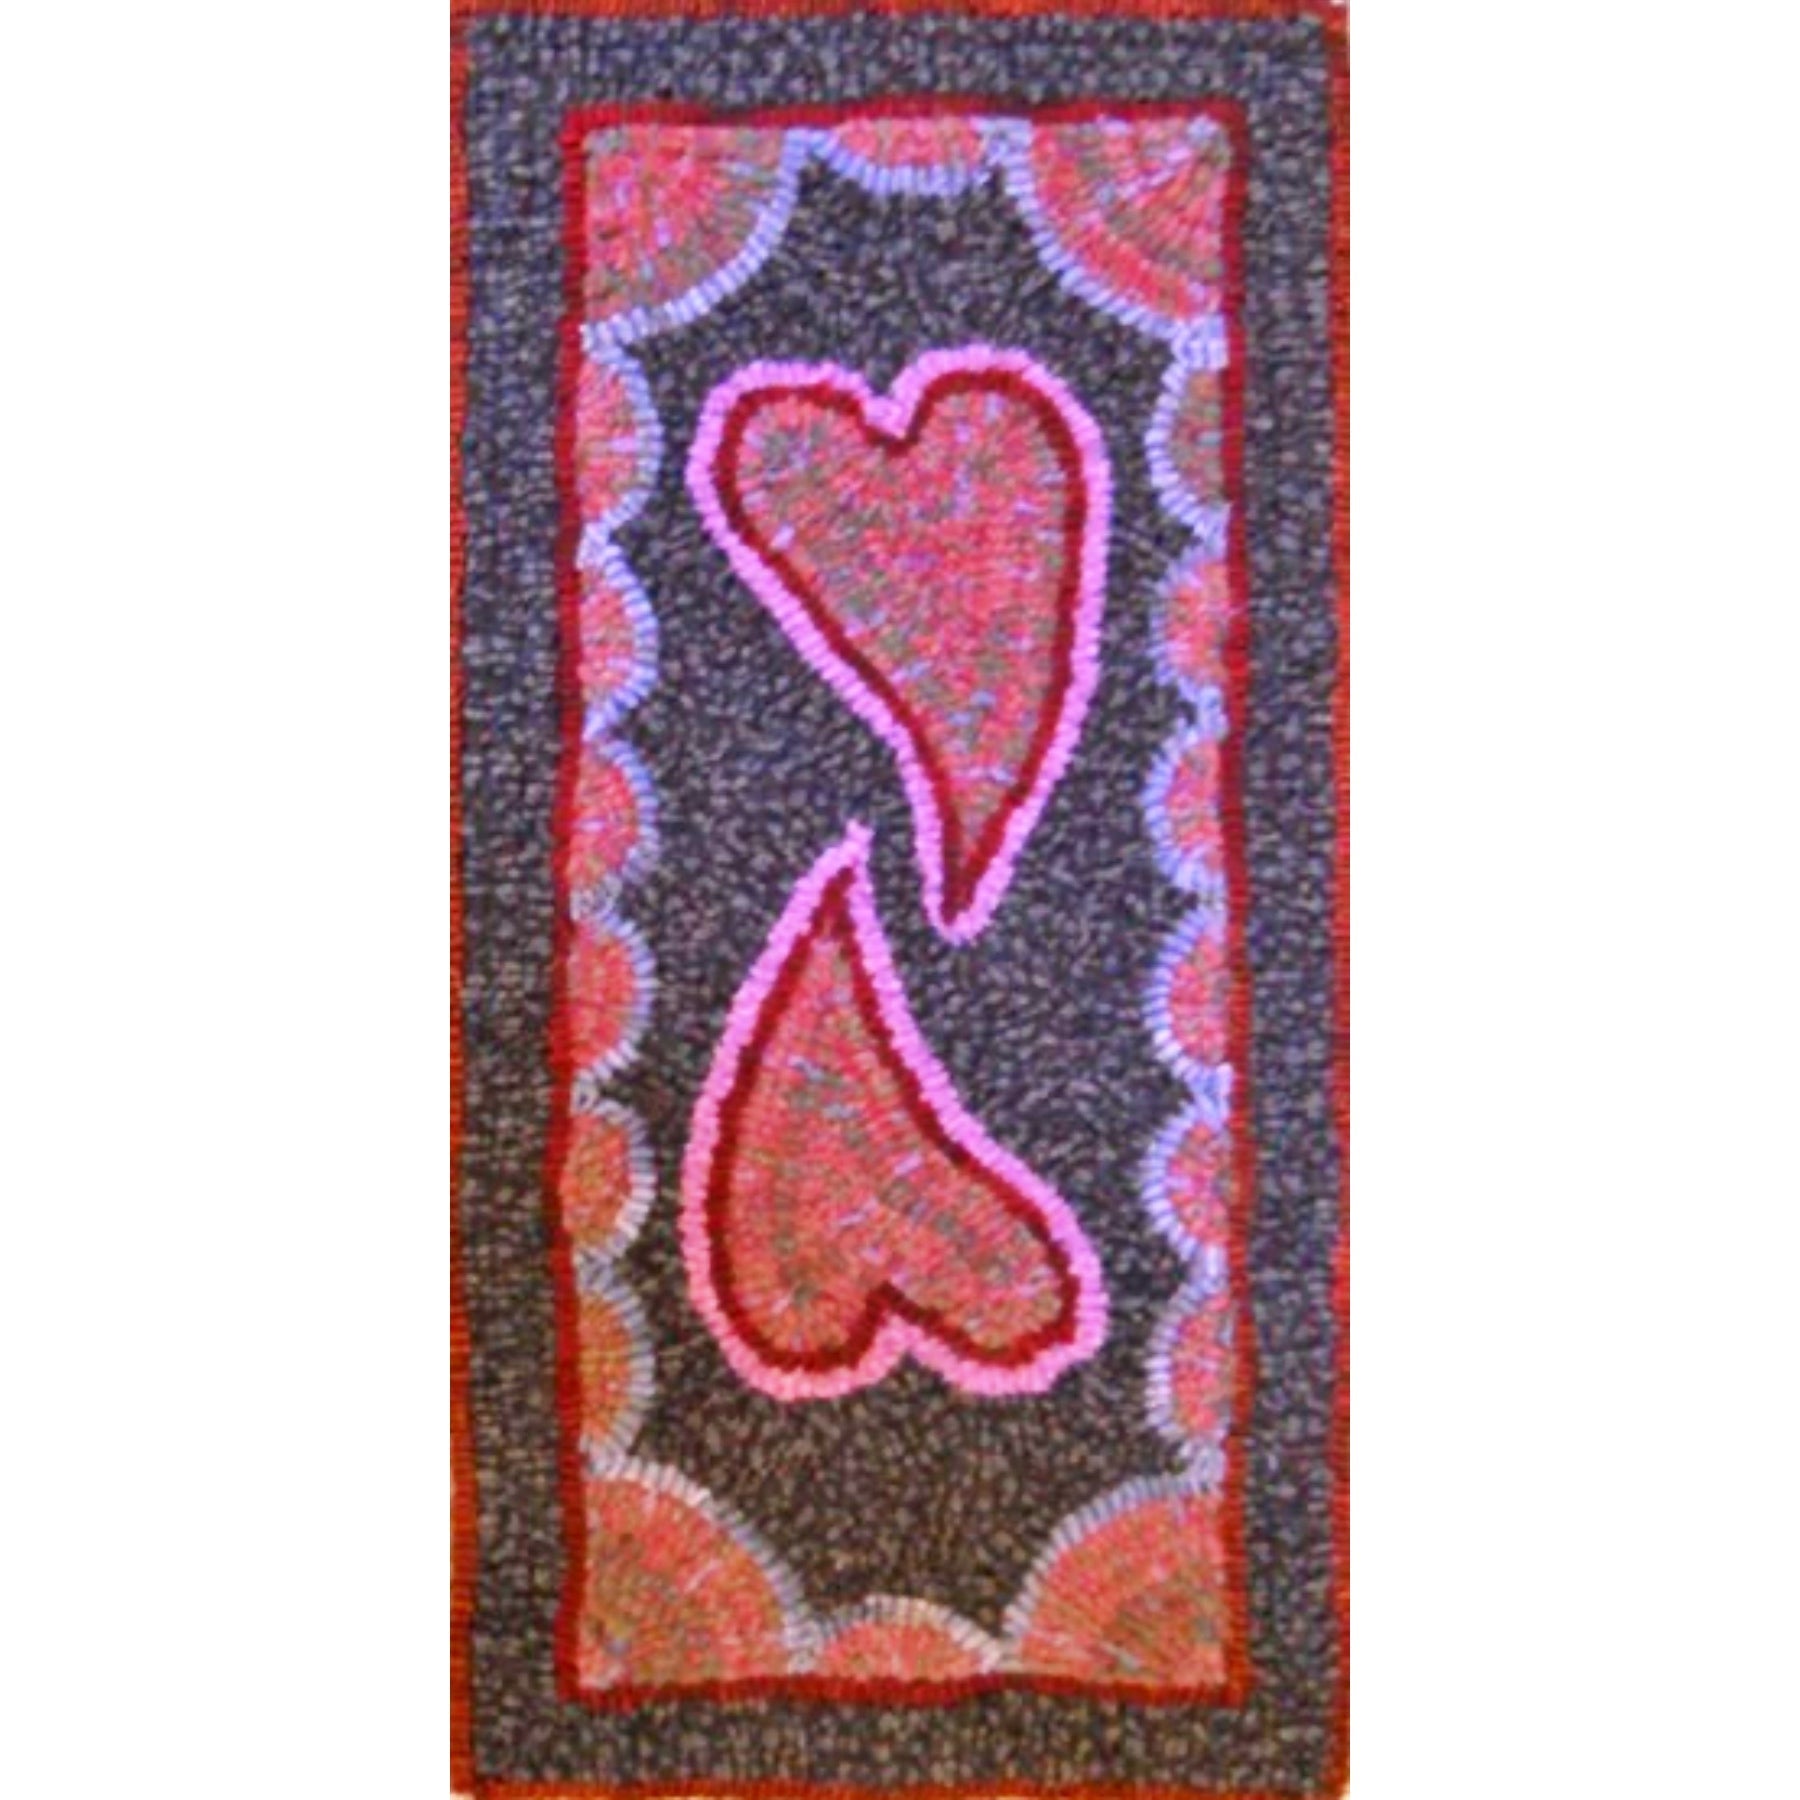 Two Hearts, rug hooked by Mary Jo Hane